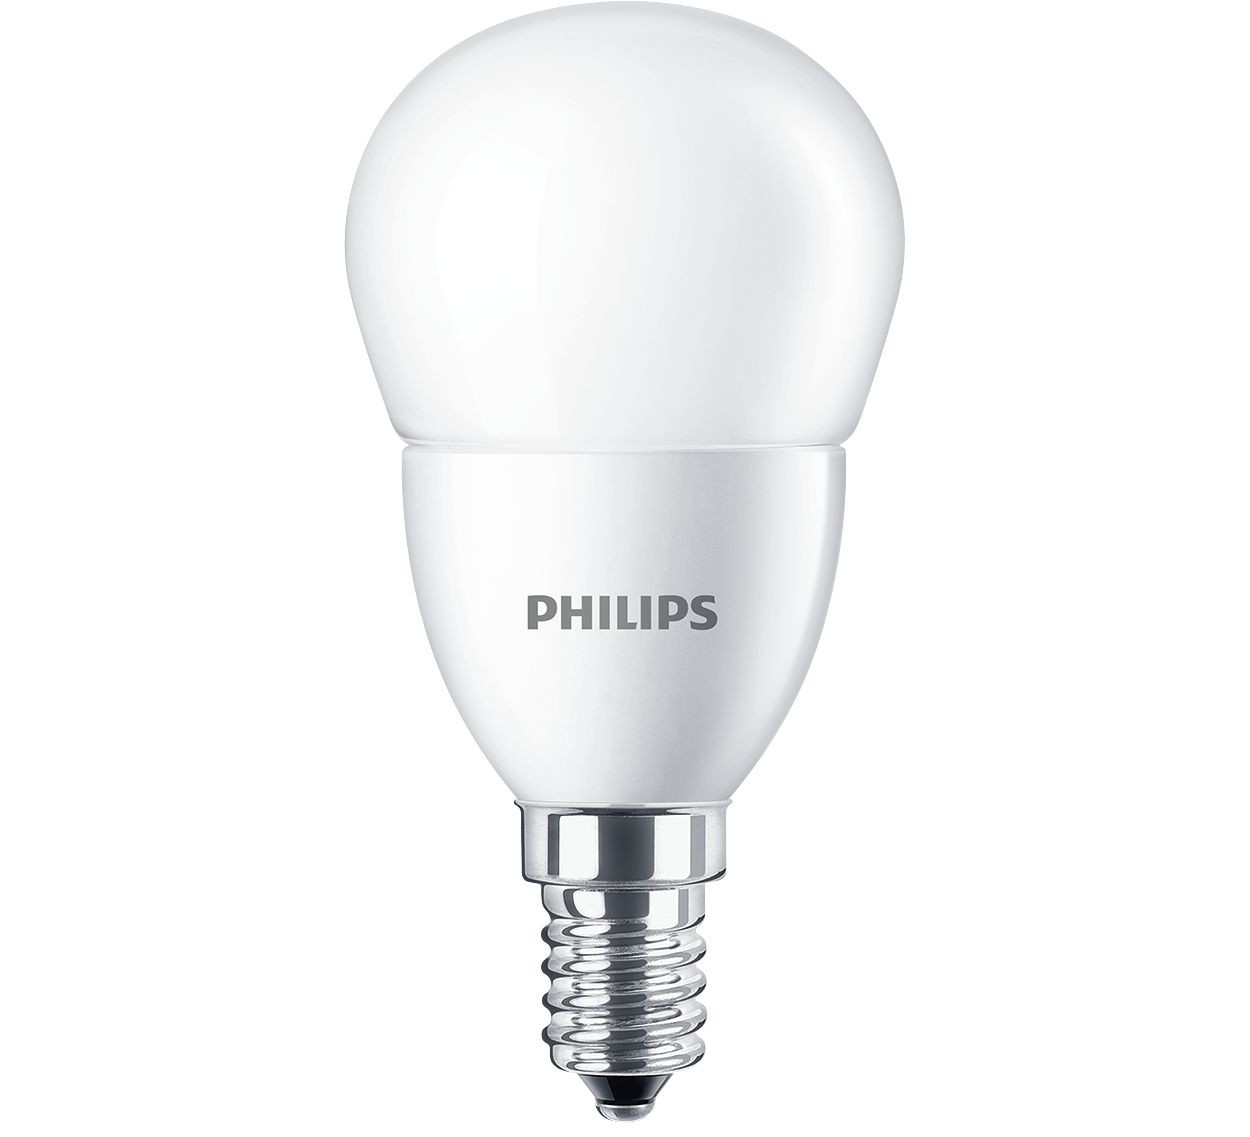 Philips CorePro LED 8718696703014 Lampadina a risparmio energetico 7 W E14 A++